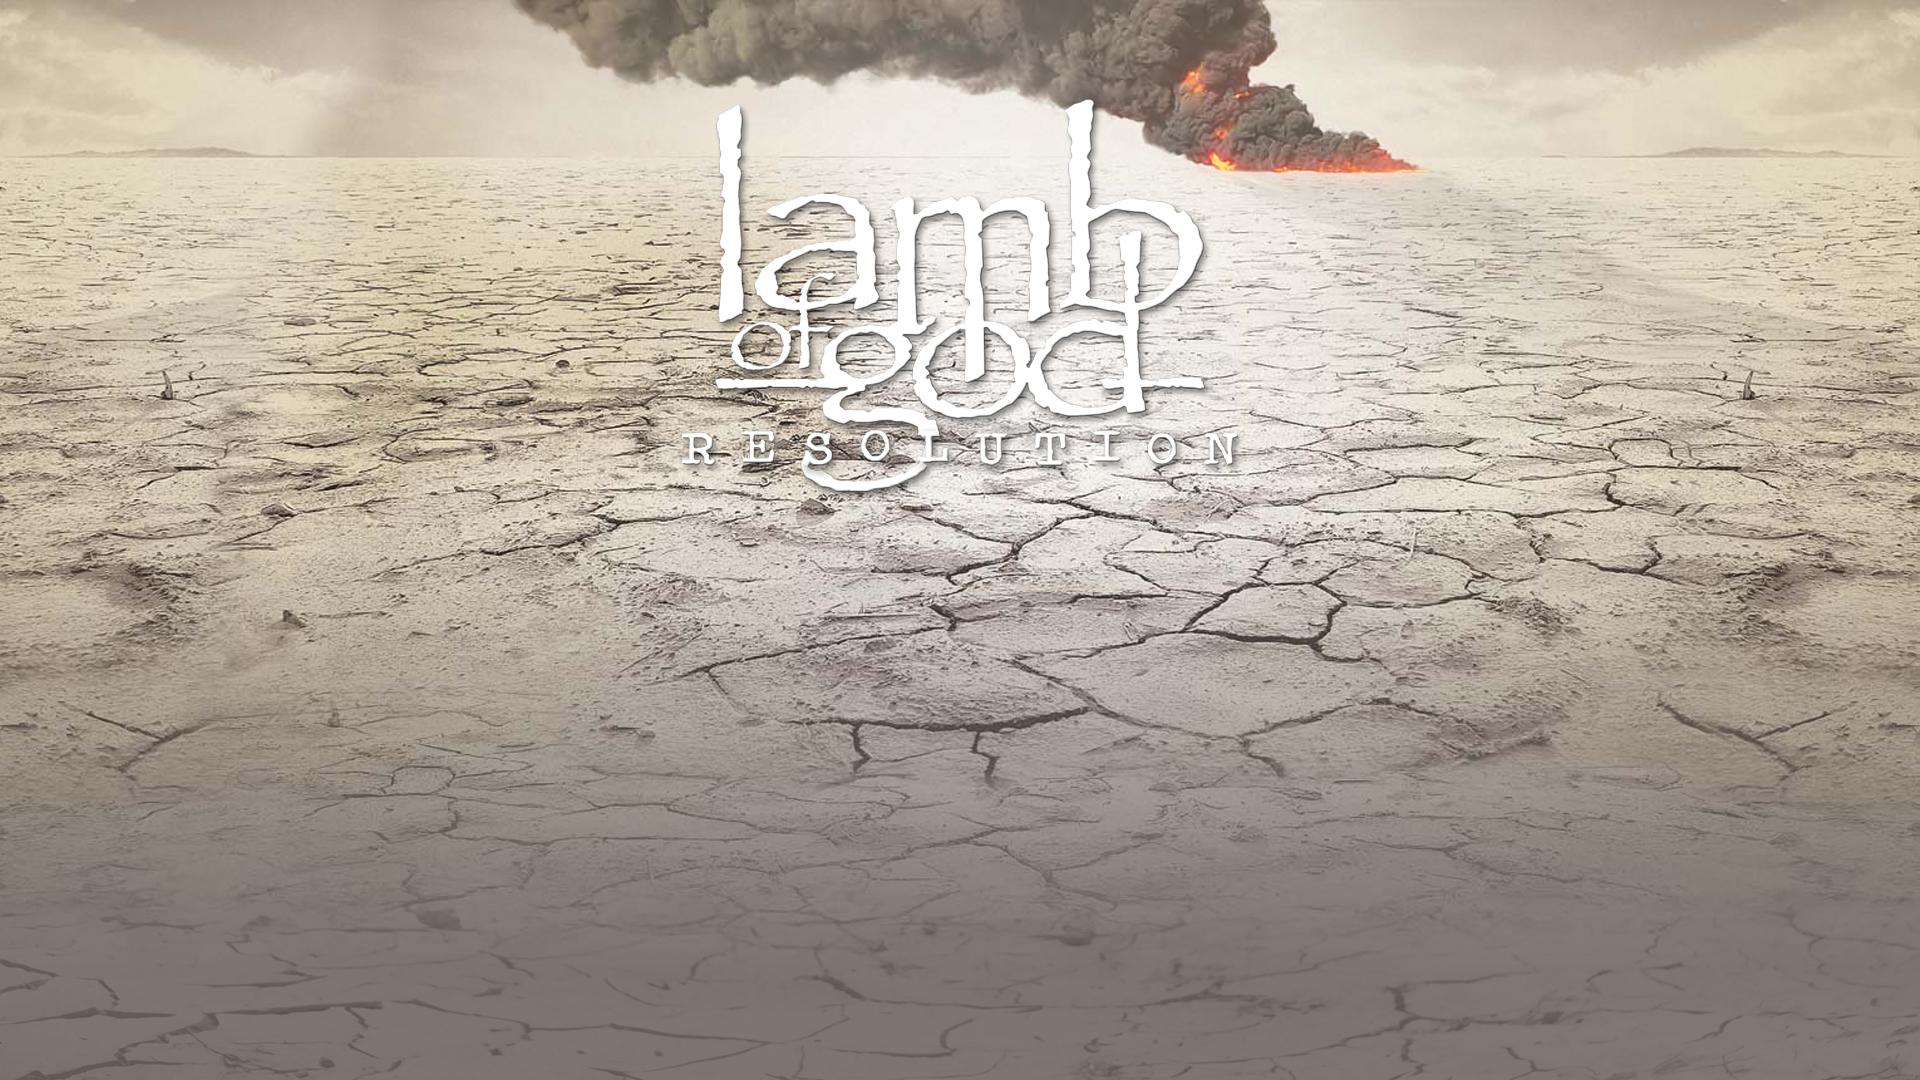 Lamb Of God at 2048 x 2048 iPad size wallpapers HD quality